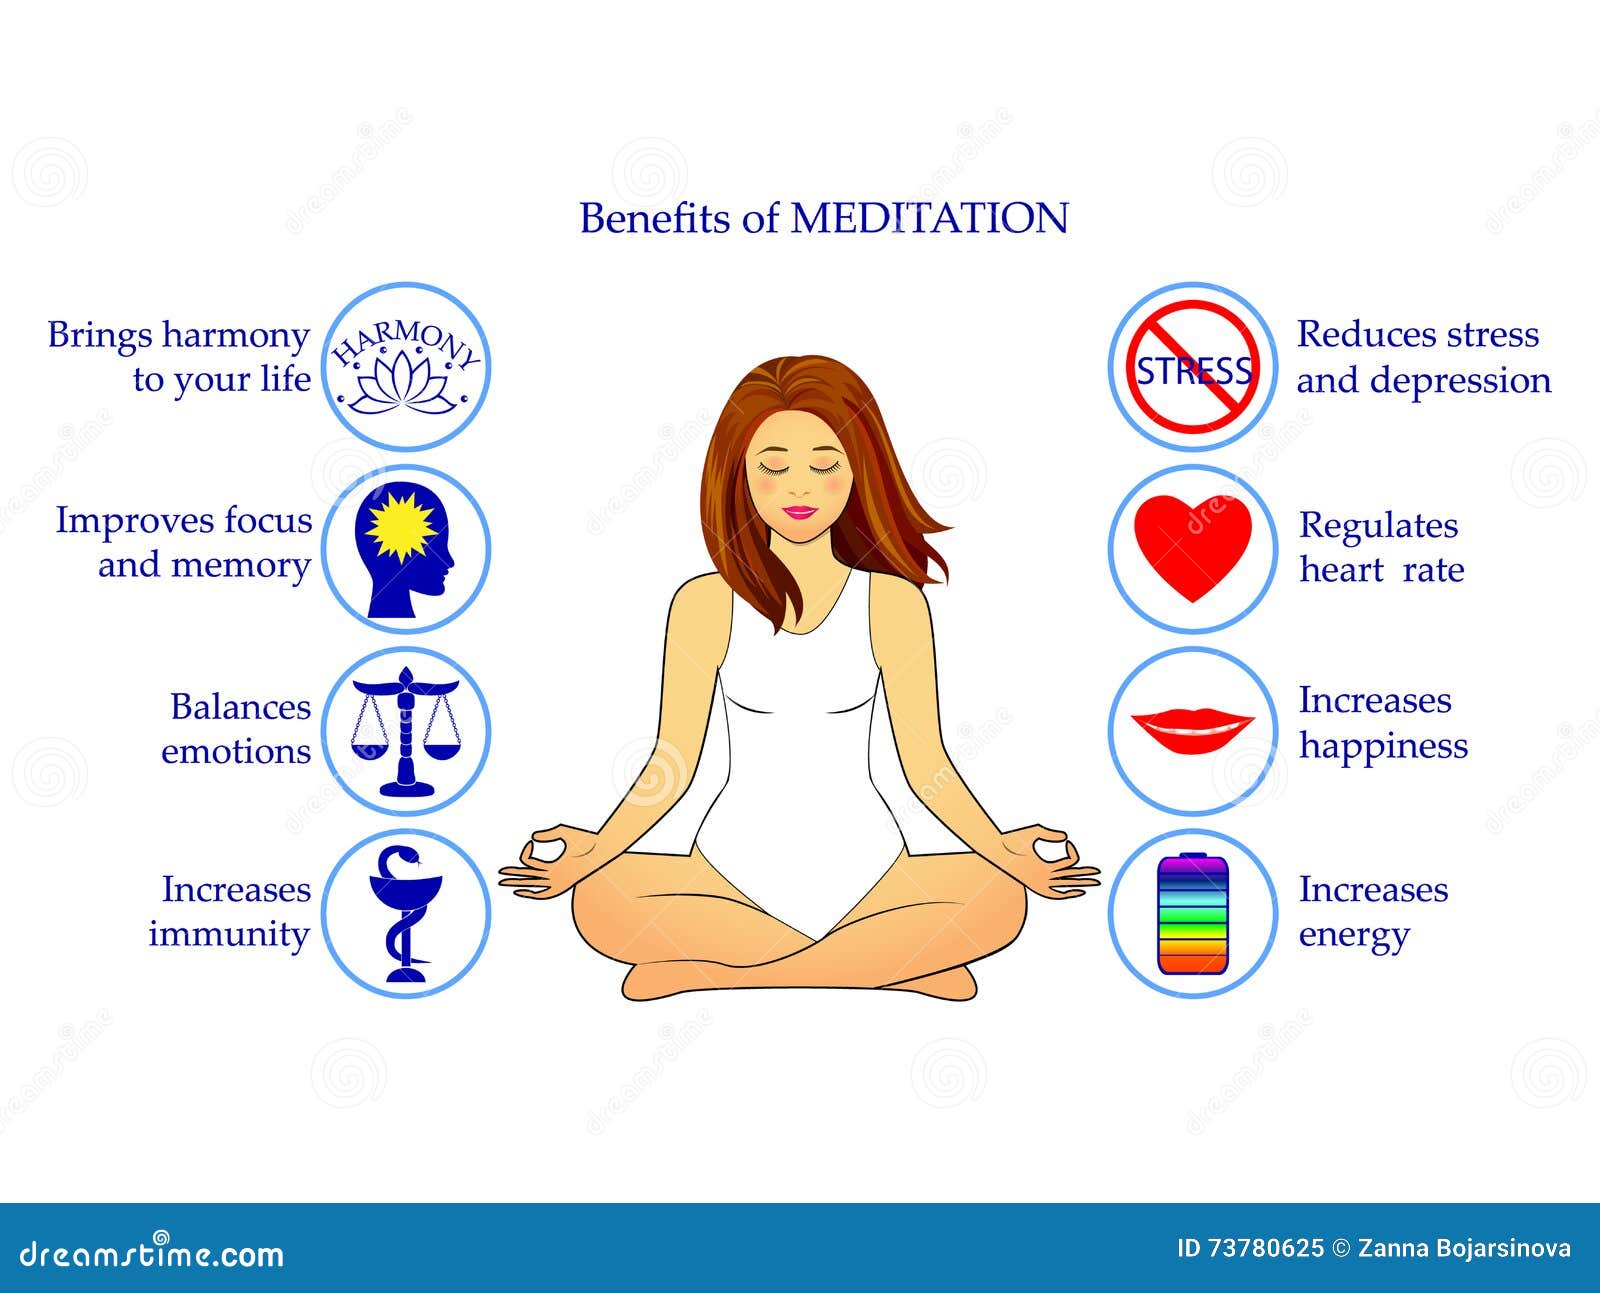 Buddhist Meditation Miami